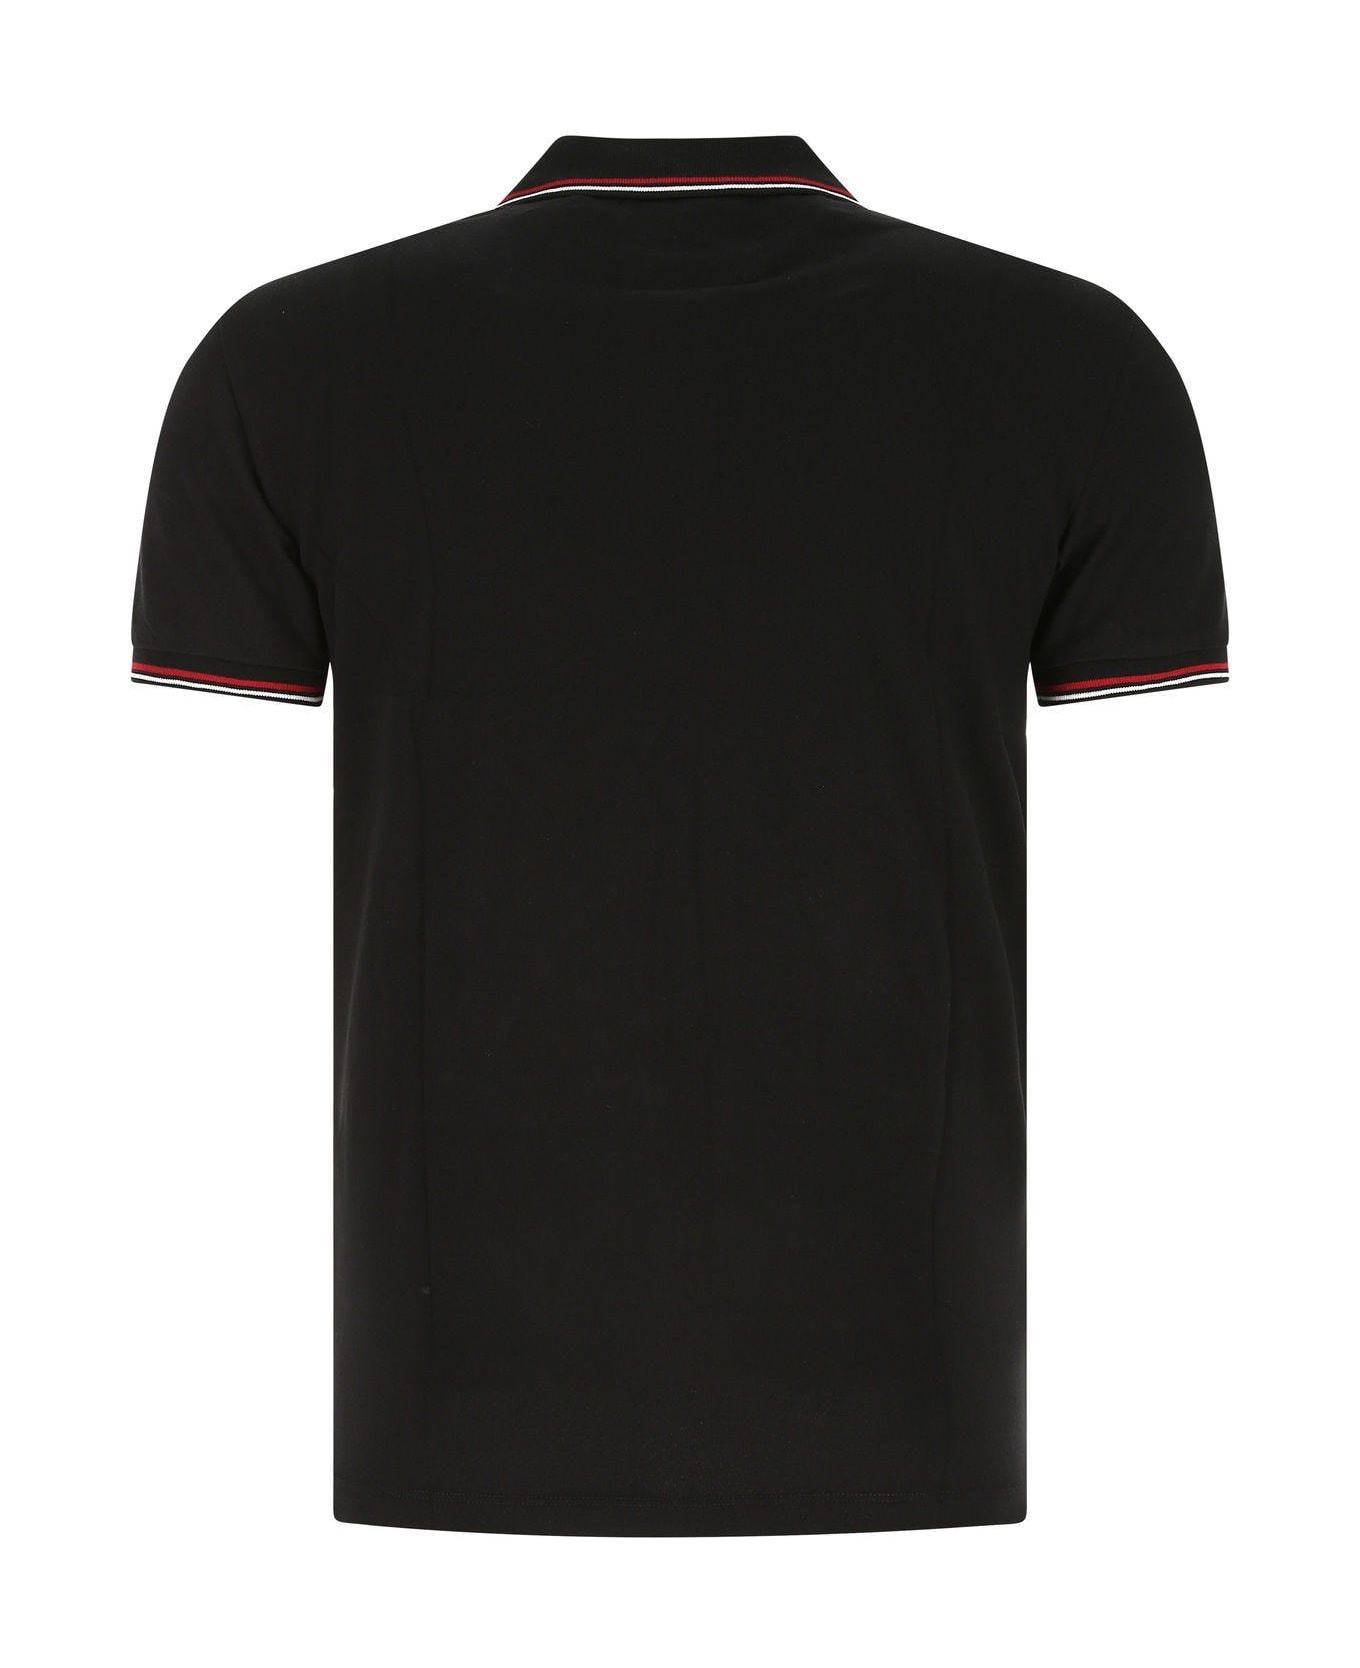 Emporio Armani Black Stretch Cotton Polo Shirt - Black